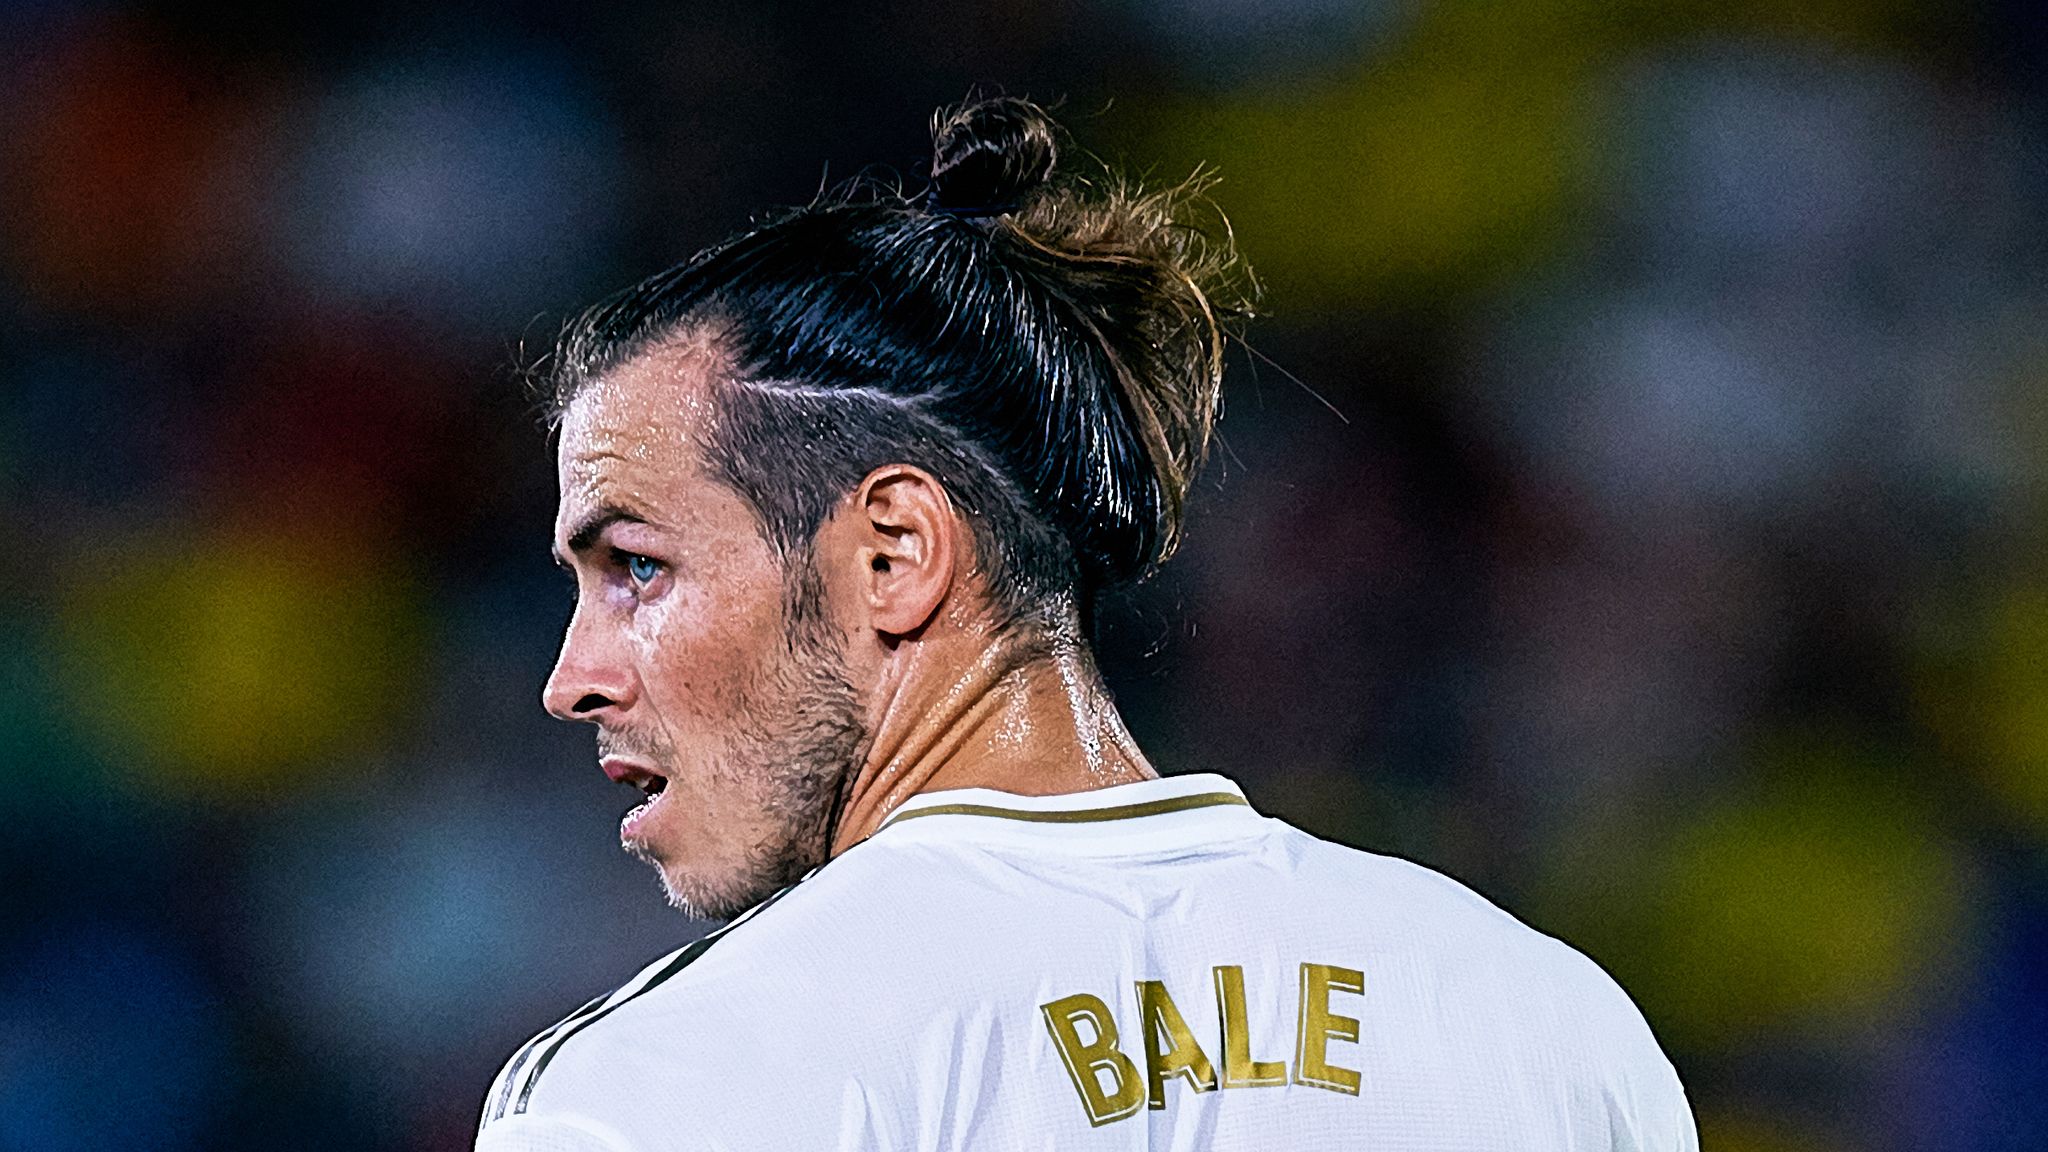 Gareth Bale Haircut 2019 3073496 Hd Wallpaper Backgrounds Download